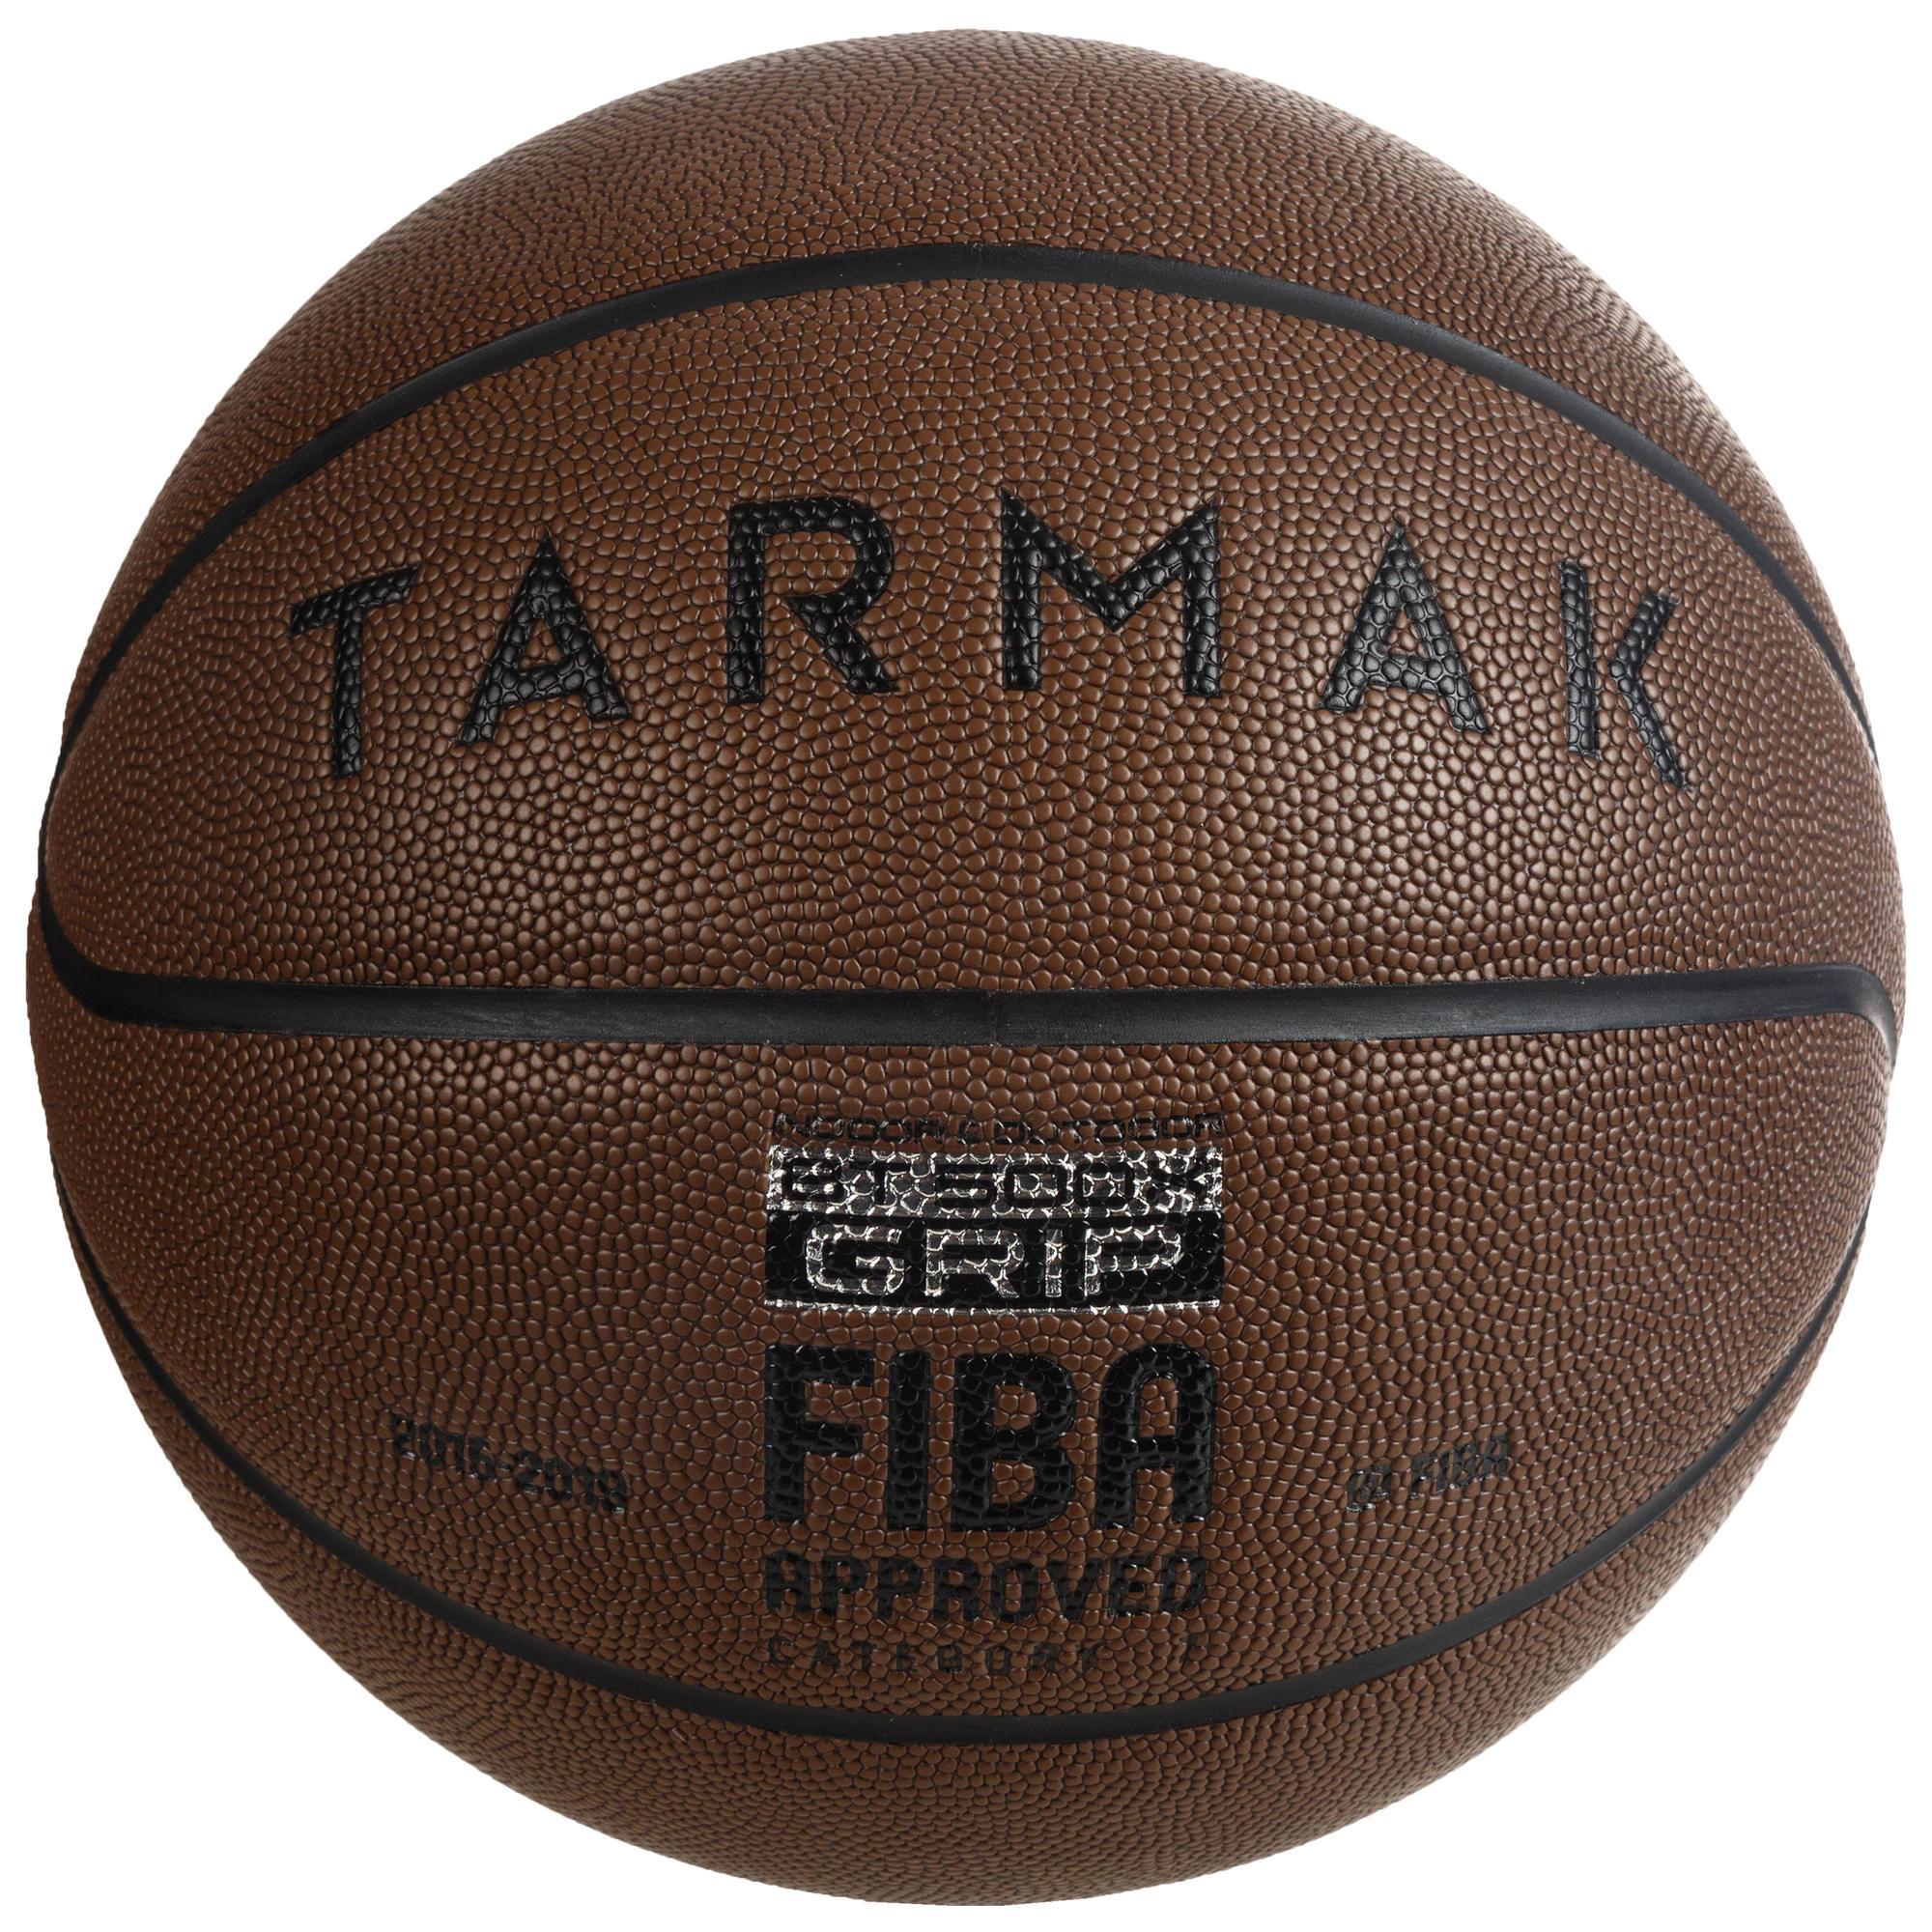 BT500 Adult Size 7 Grippy Basketball 